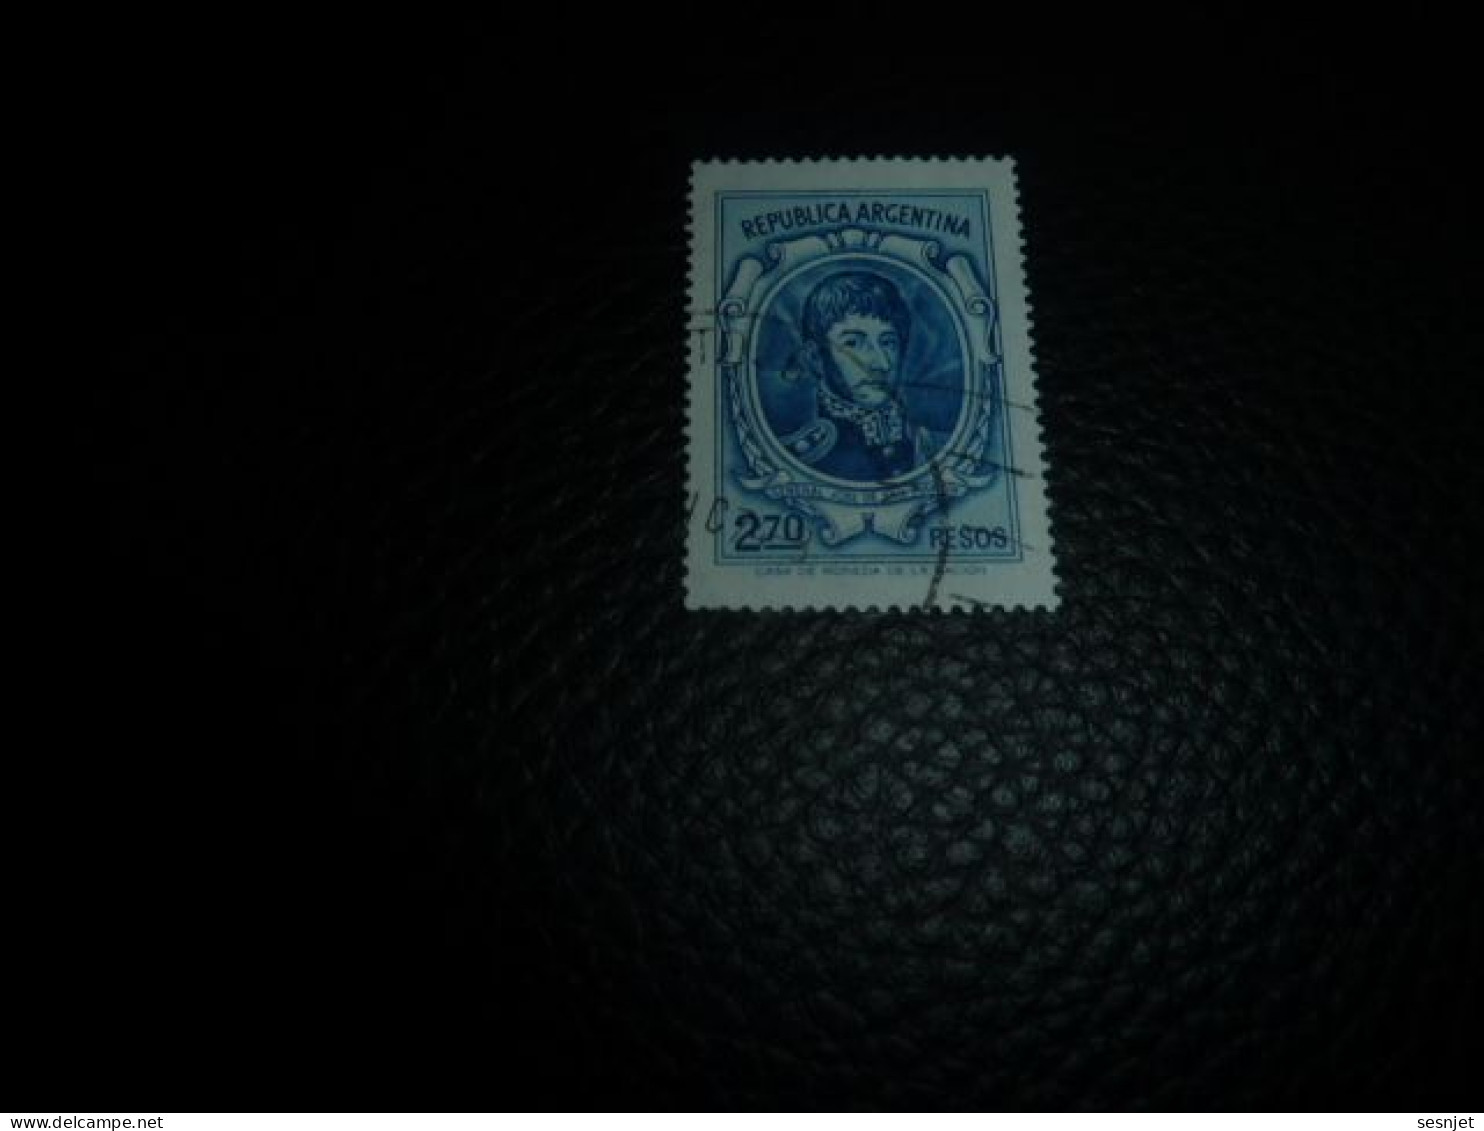 Republica Argentina - Général José De San Martin - 2.70 Pesos - Yt 975 - Bleu - Oblitéré - Année 1974 - - Usados